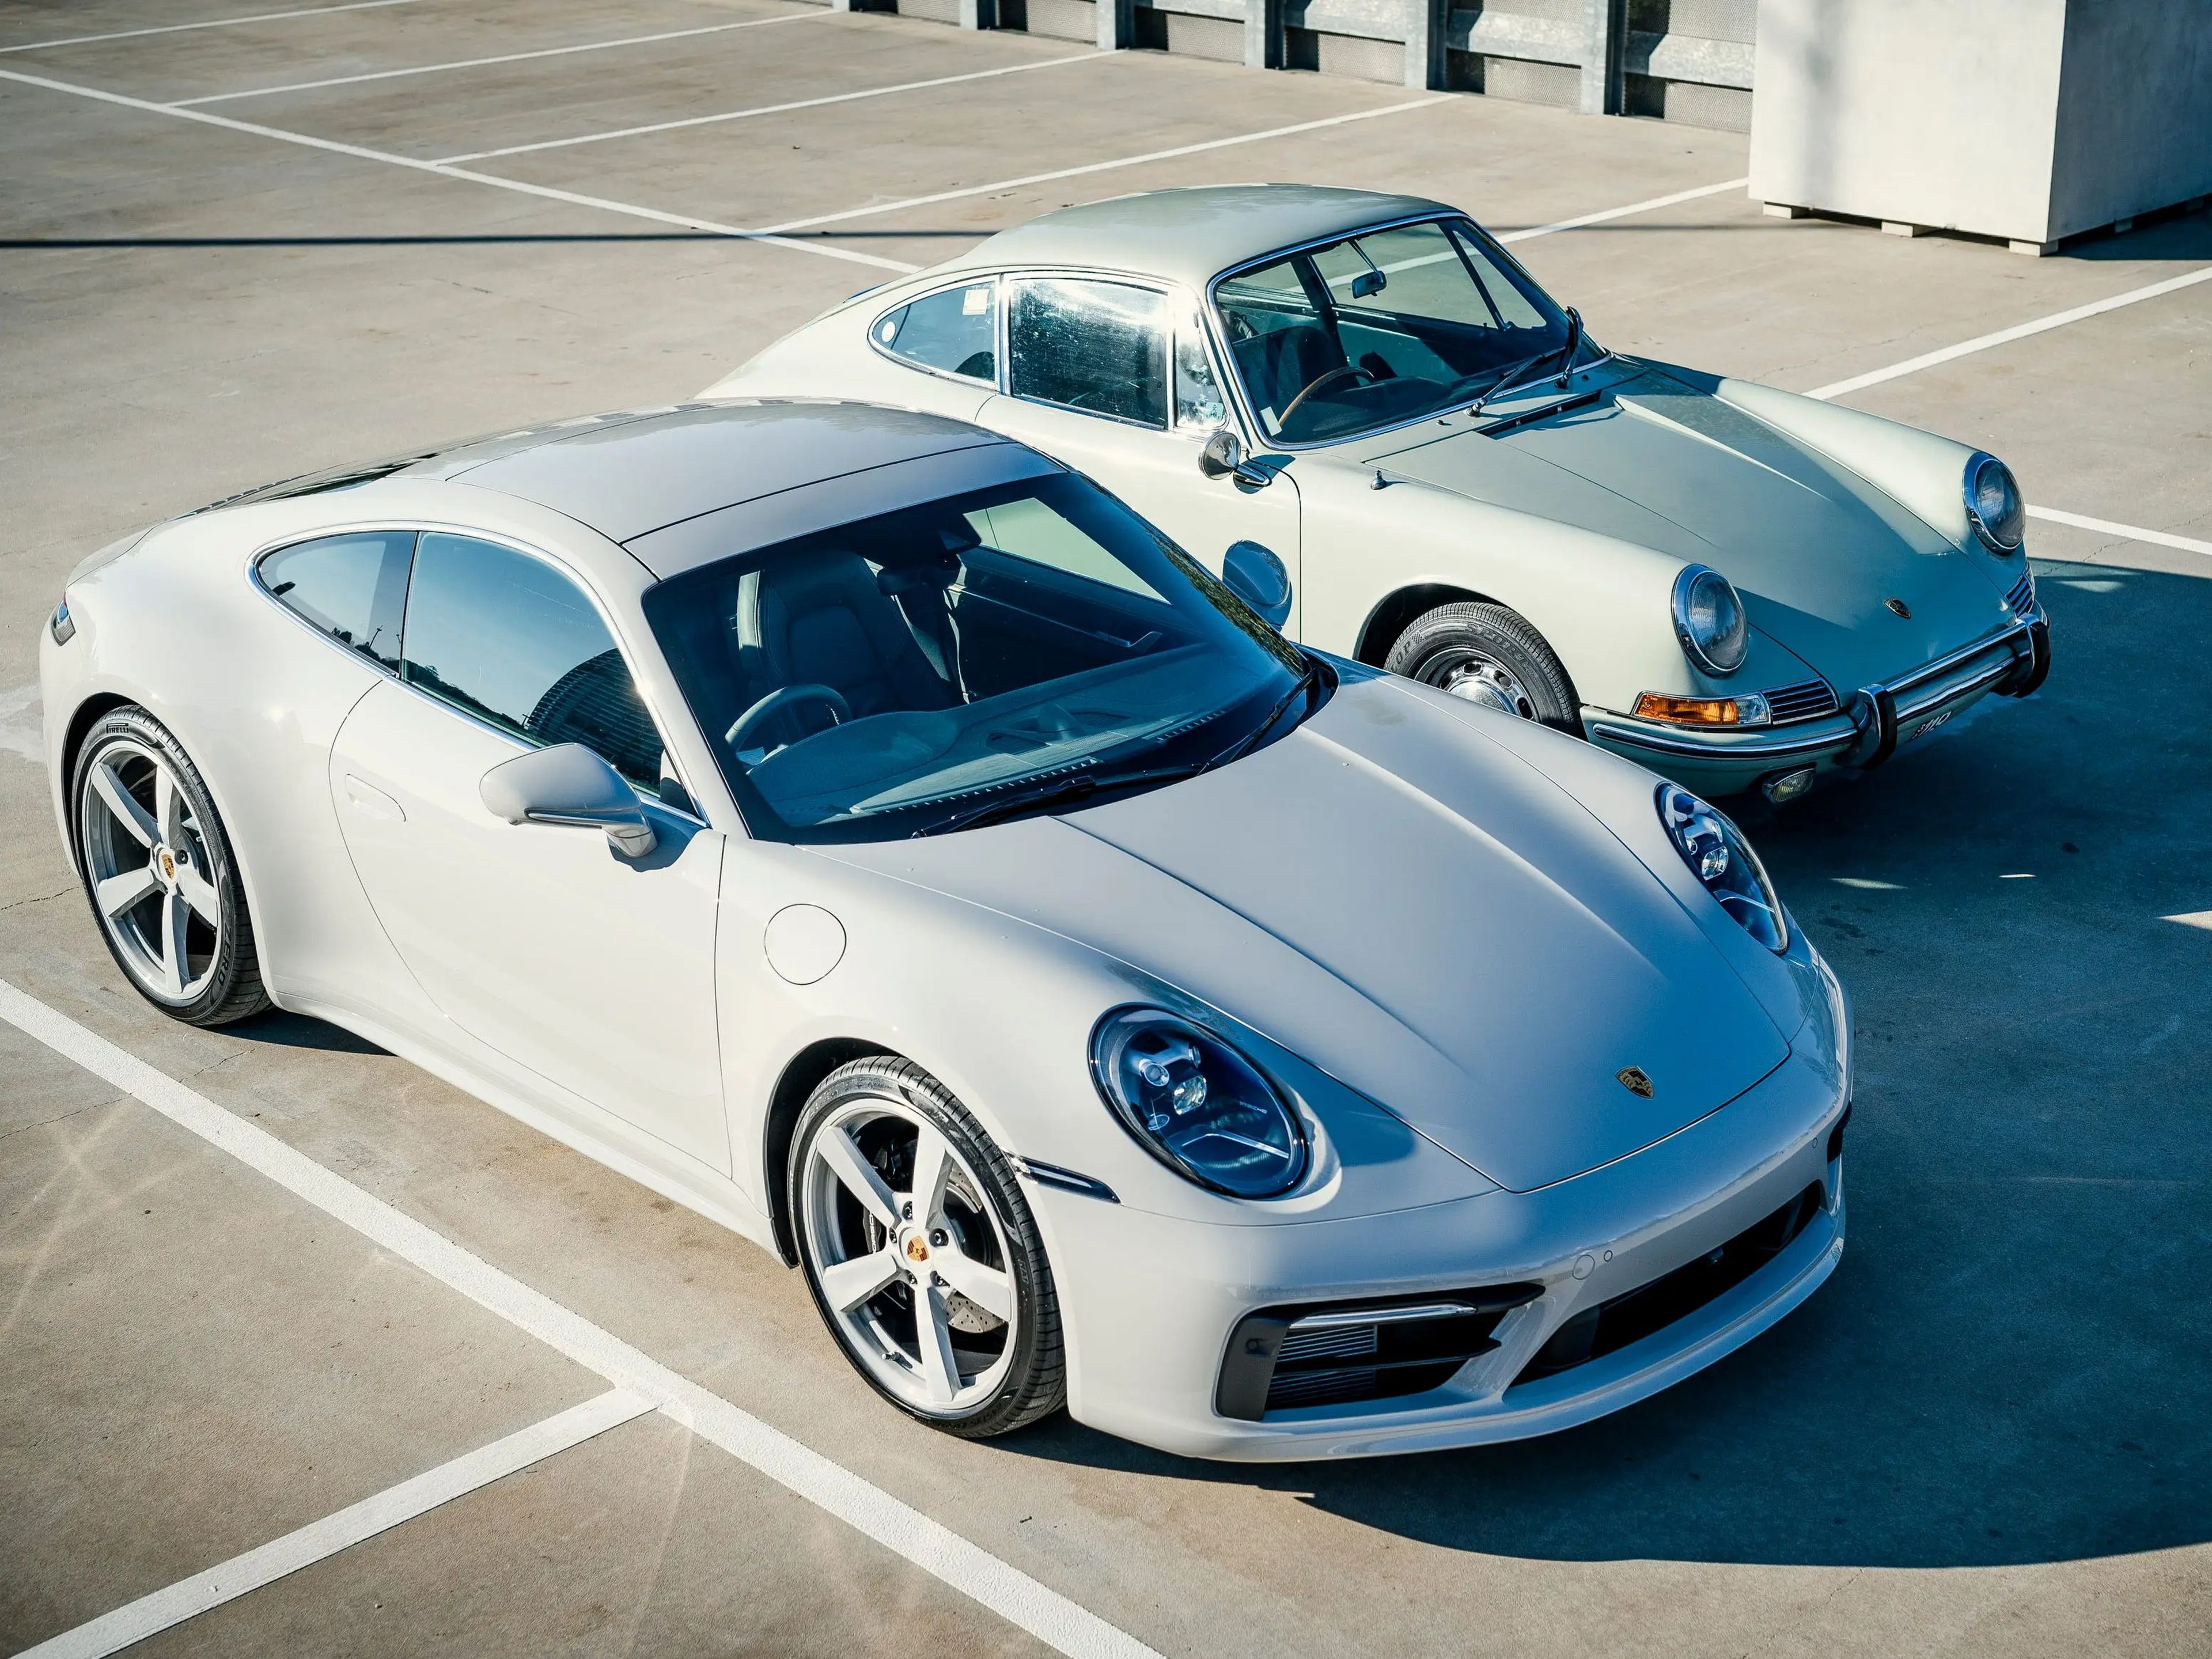 Un Porsche 911 Carrera S moderno (delante) y un Porsche 911 de 1965 (detrás) en Australia en 2020.